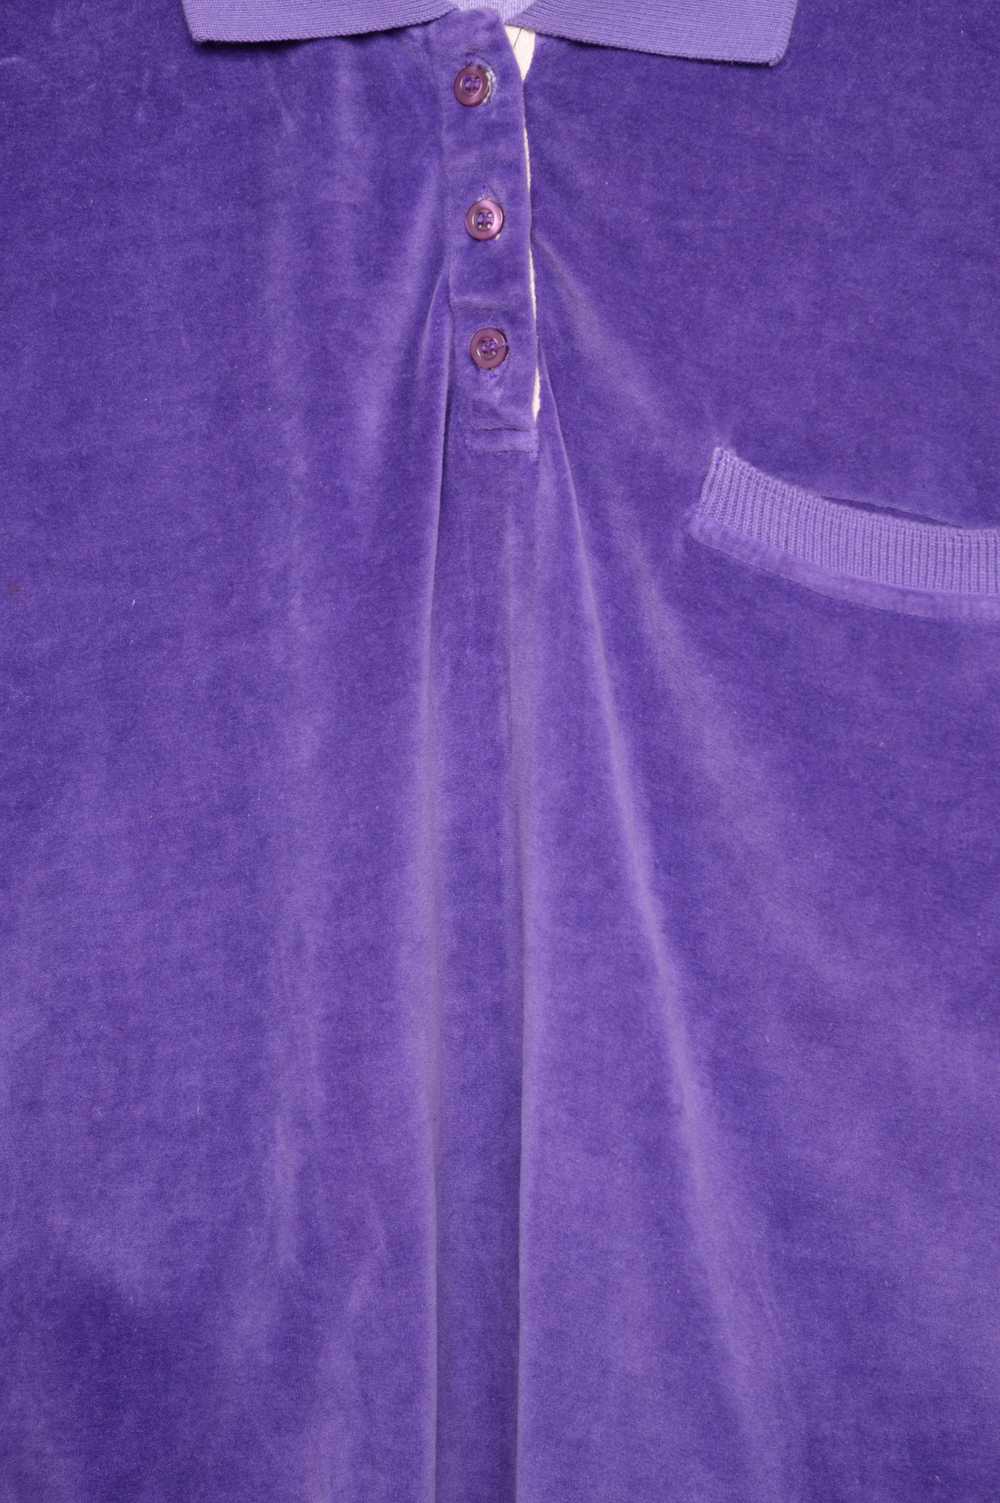 1990s Purple Velour Shirt - image 2